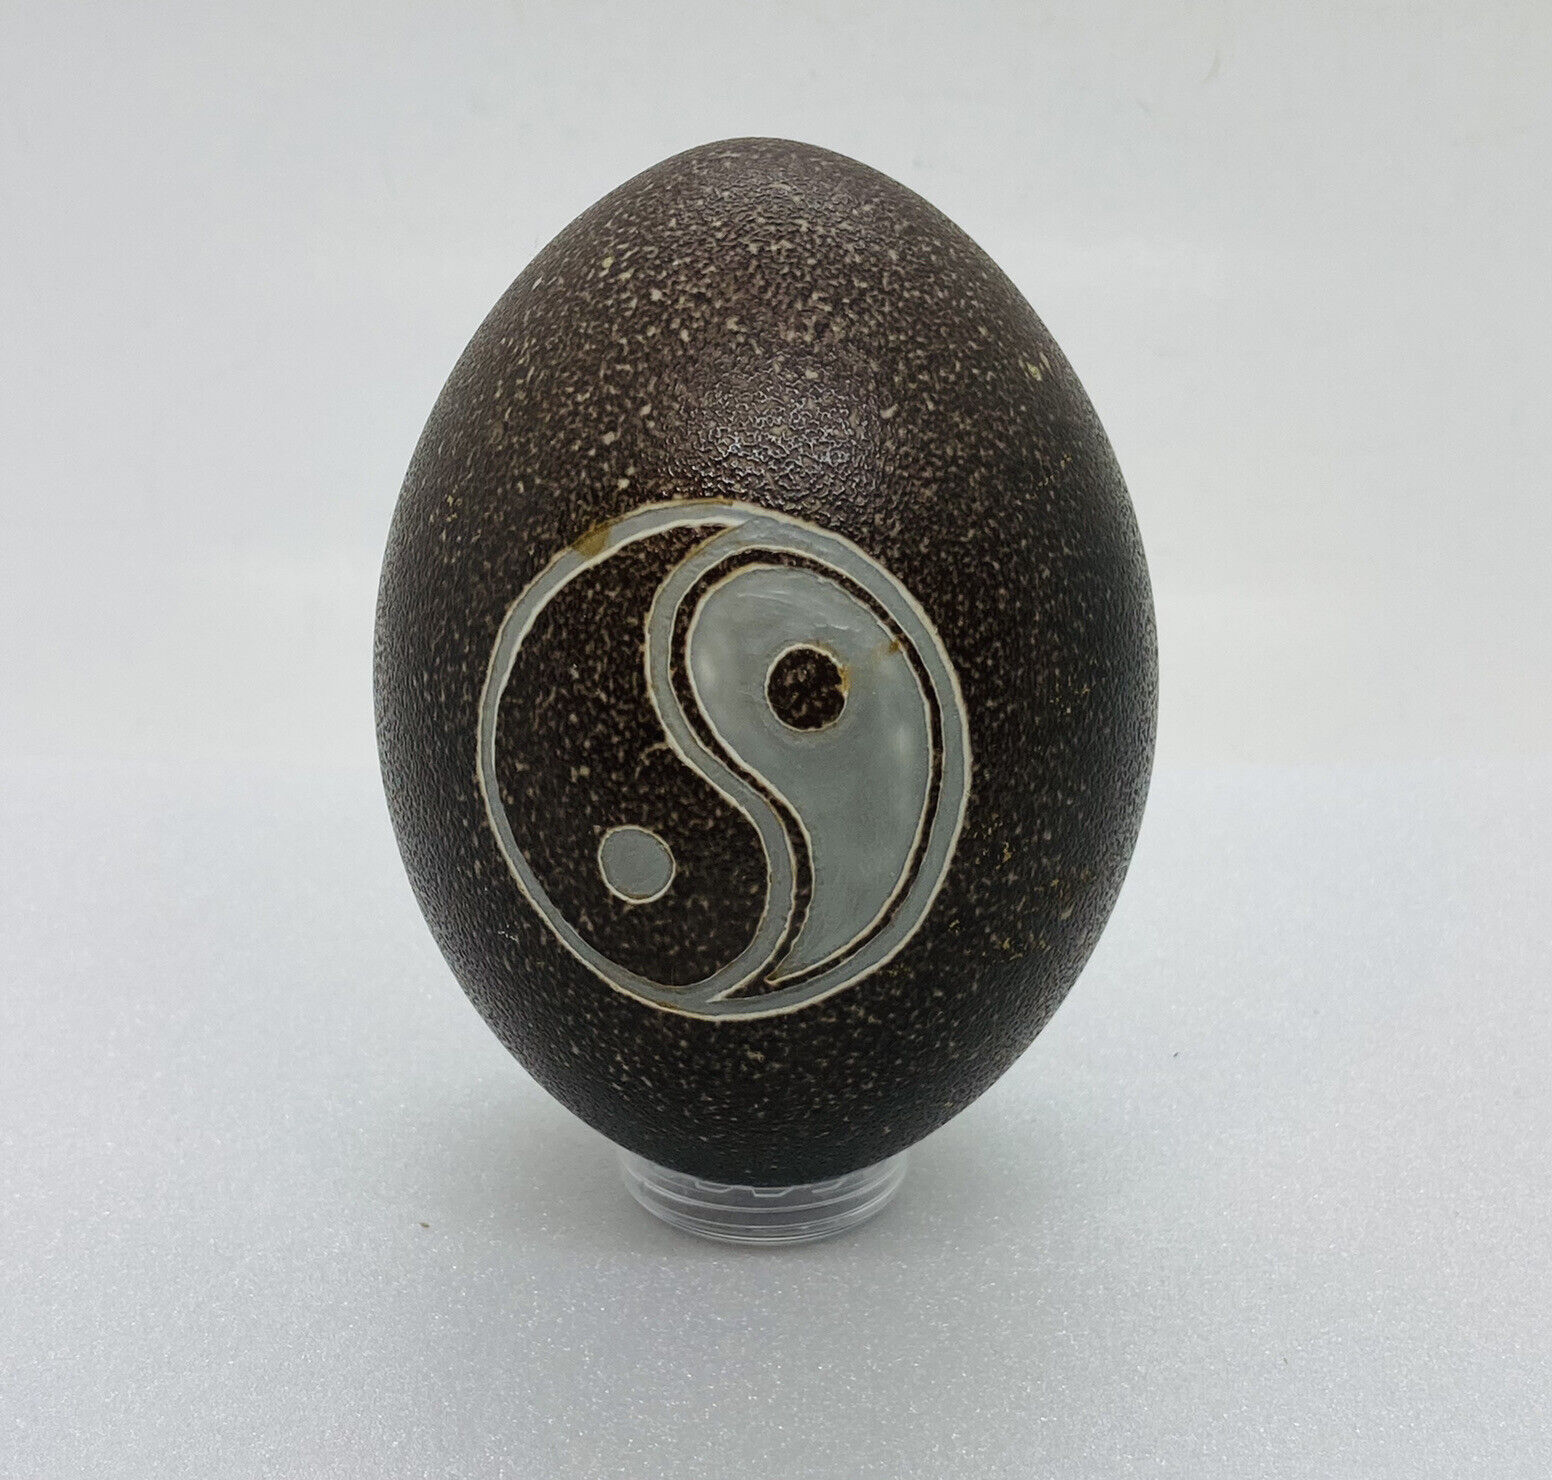 Vintage Ying Yang Ceramic Lucky Charm Egg Hollow Spiritual Feng Shui Art 16